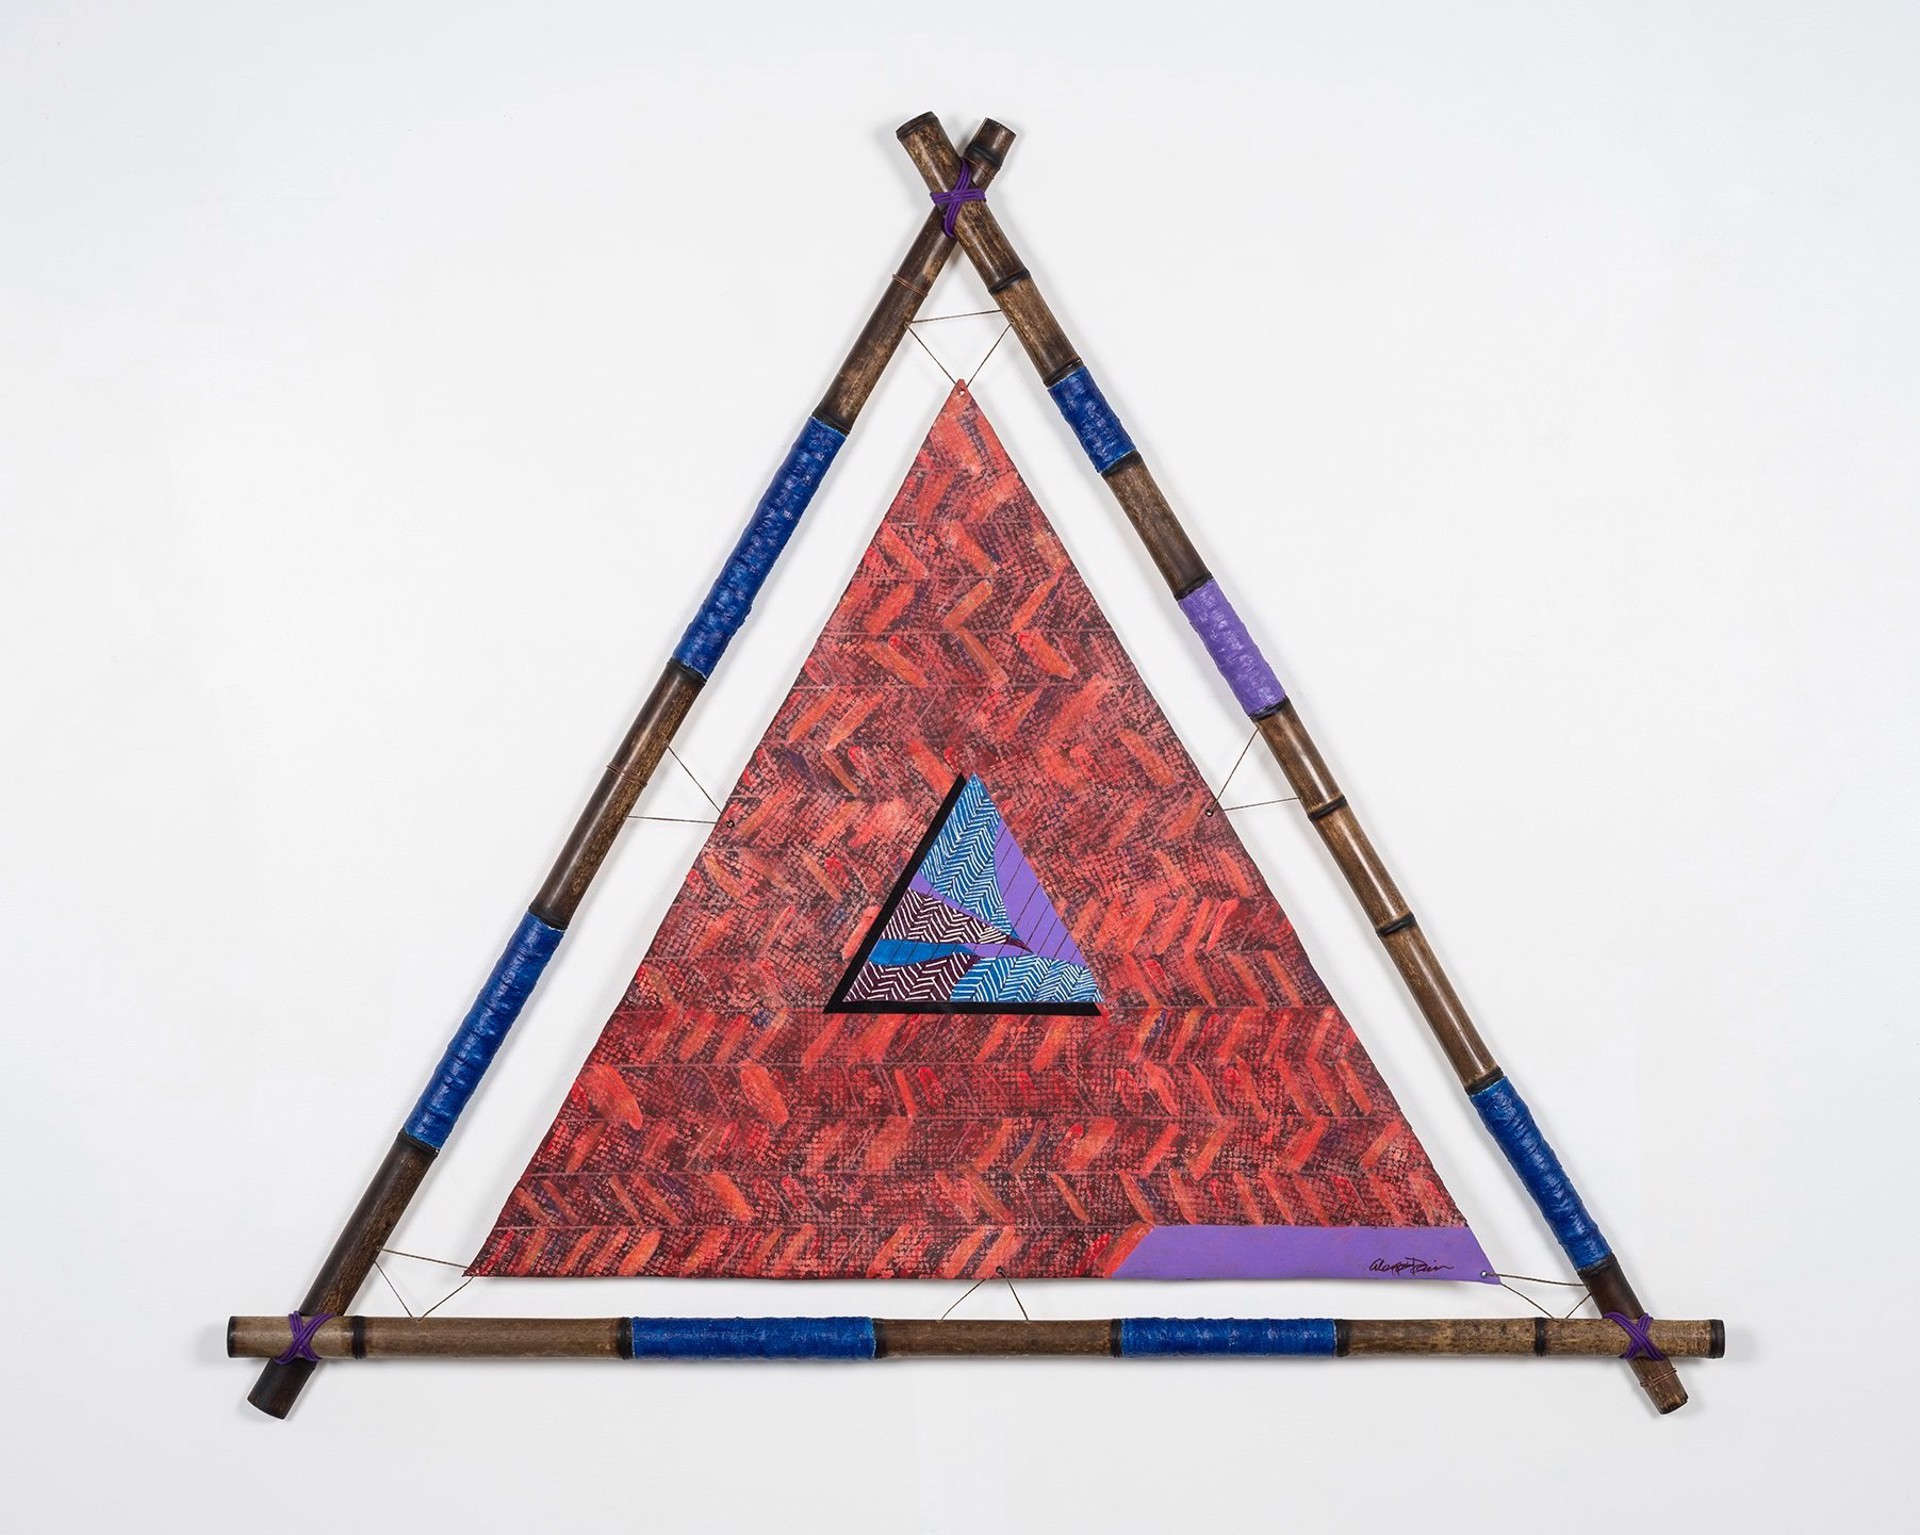 Suspended Pyramid #1 by Alonzo Davis